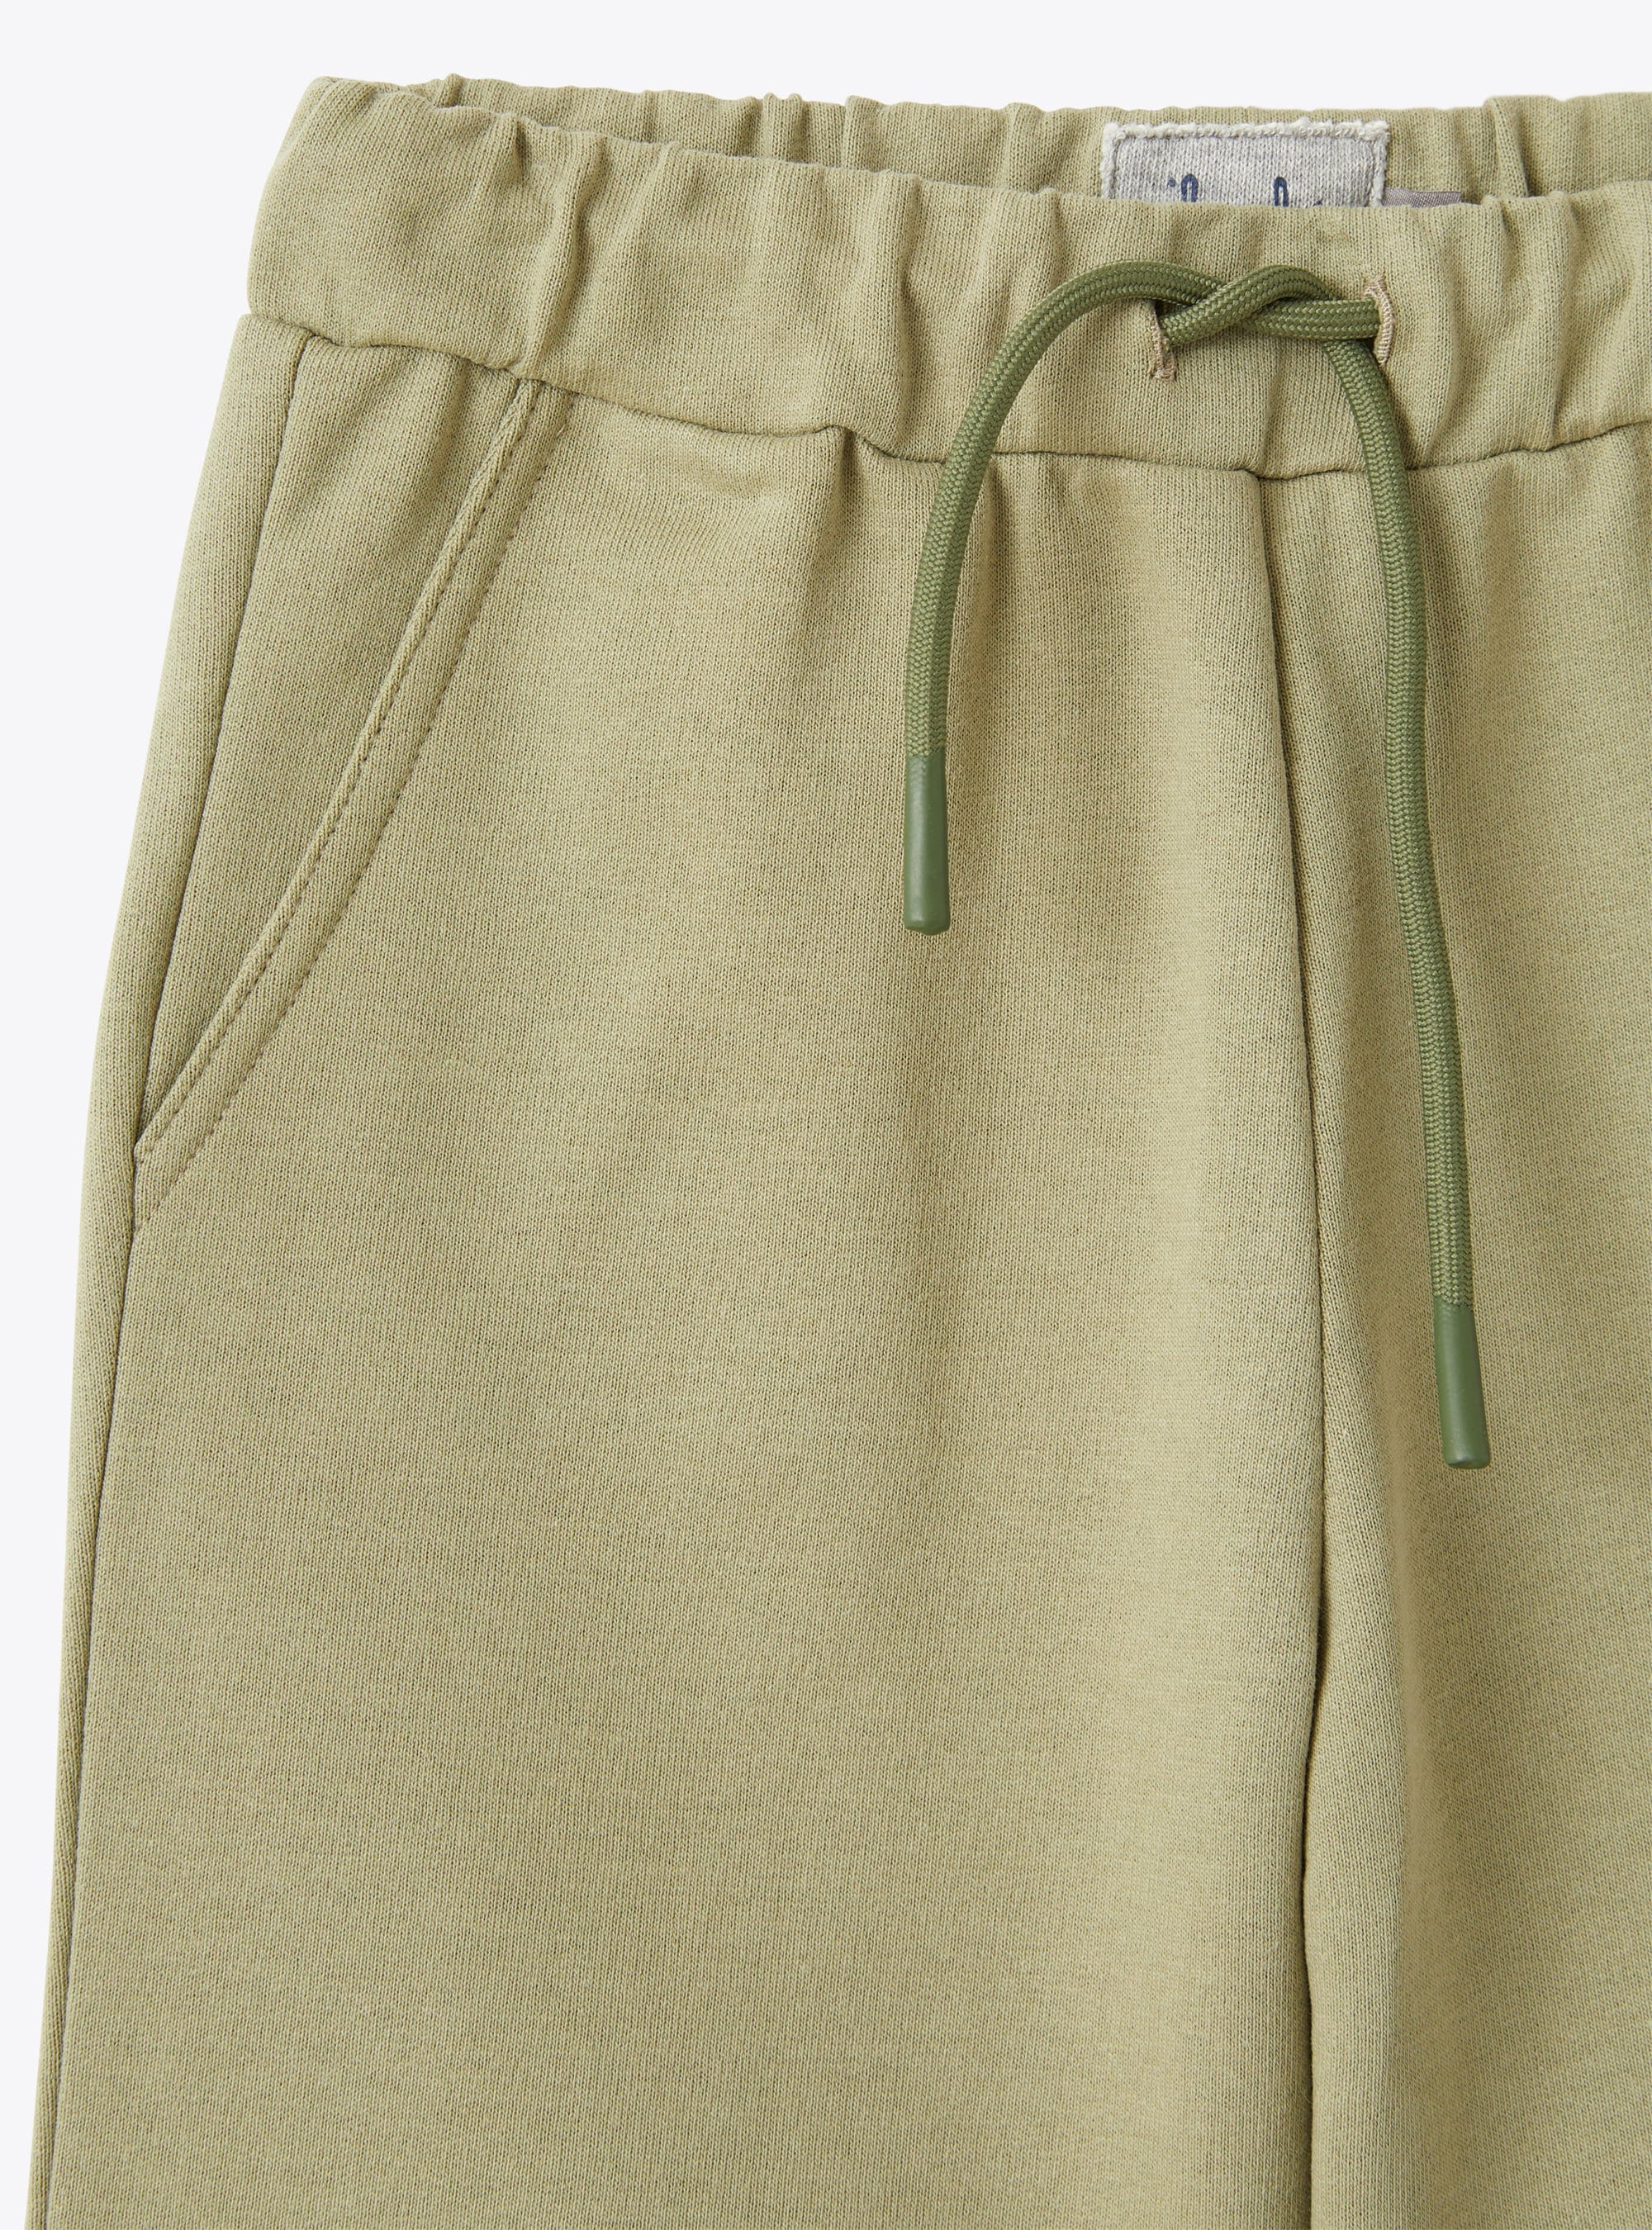 Bermuda shorts in green fleece - Green | Il Gufo